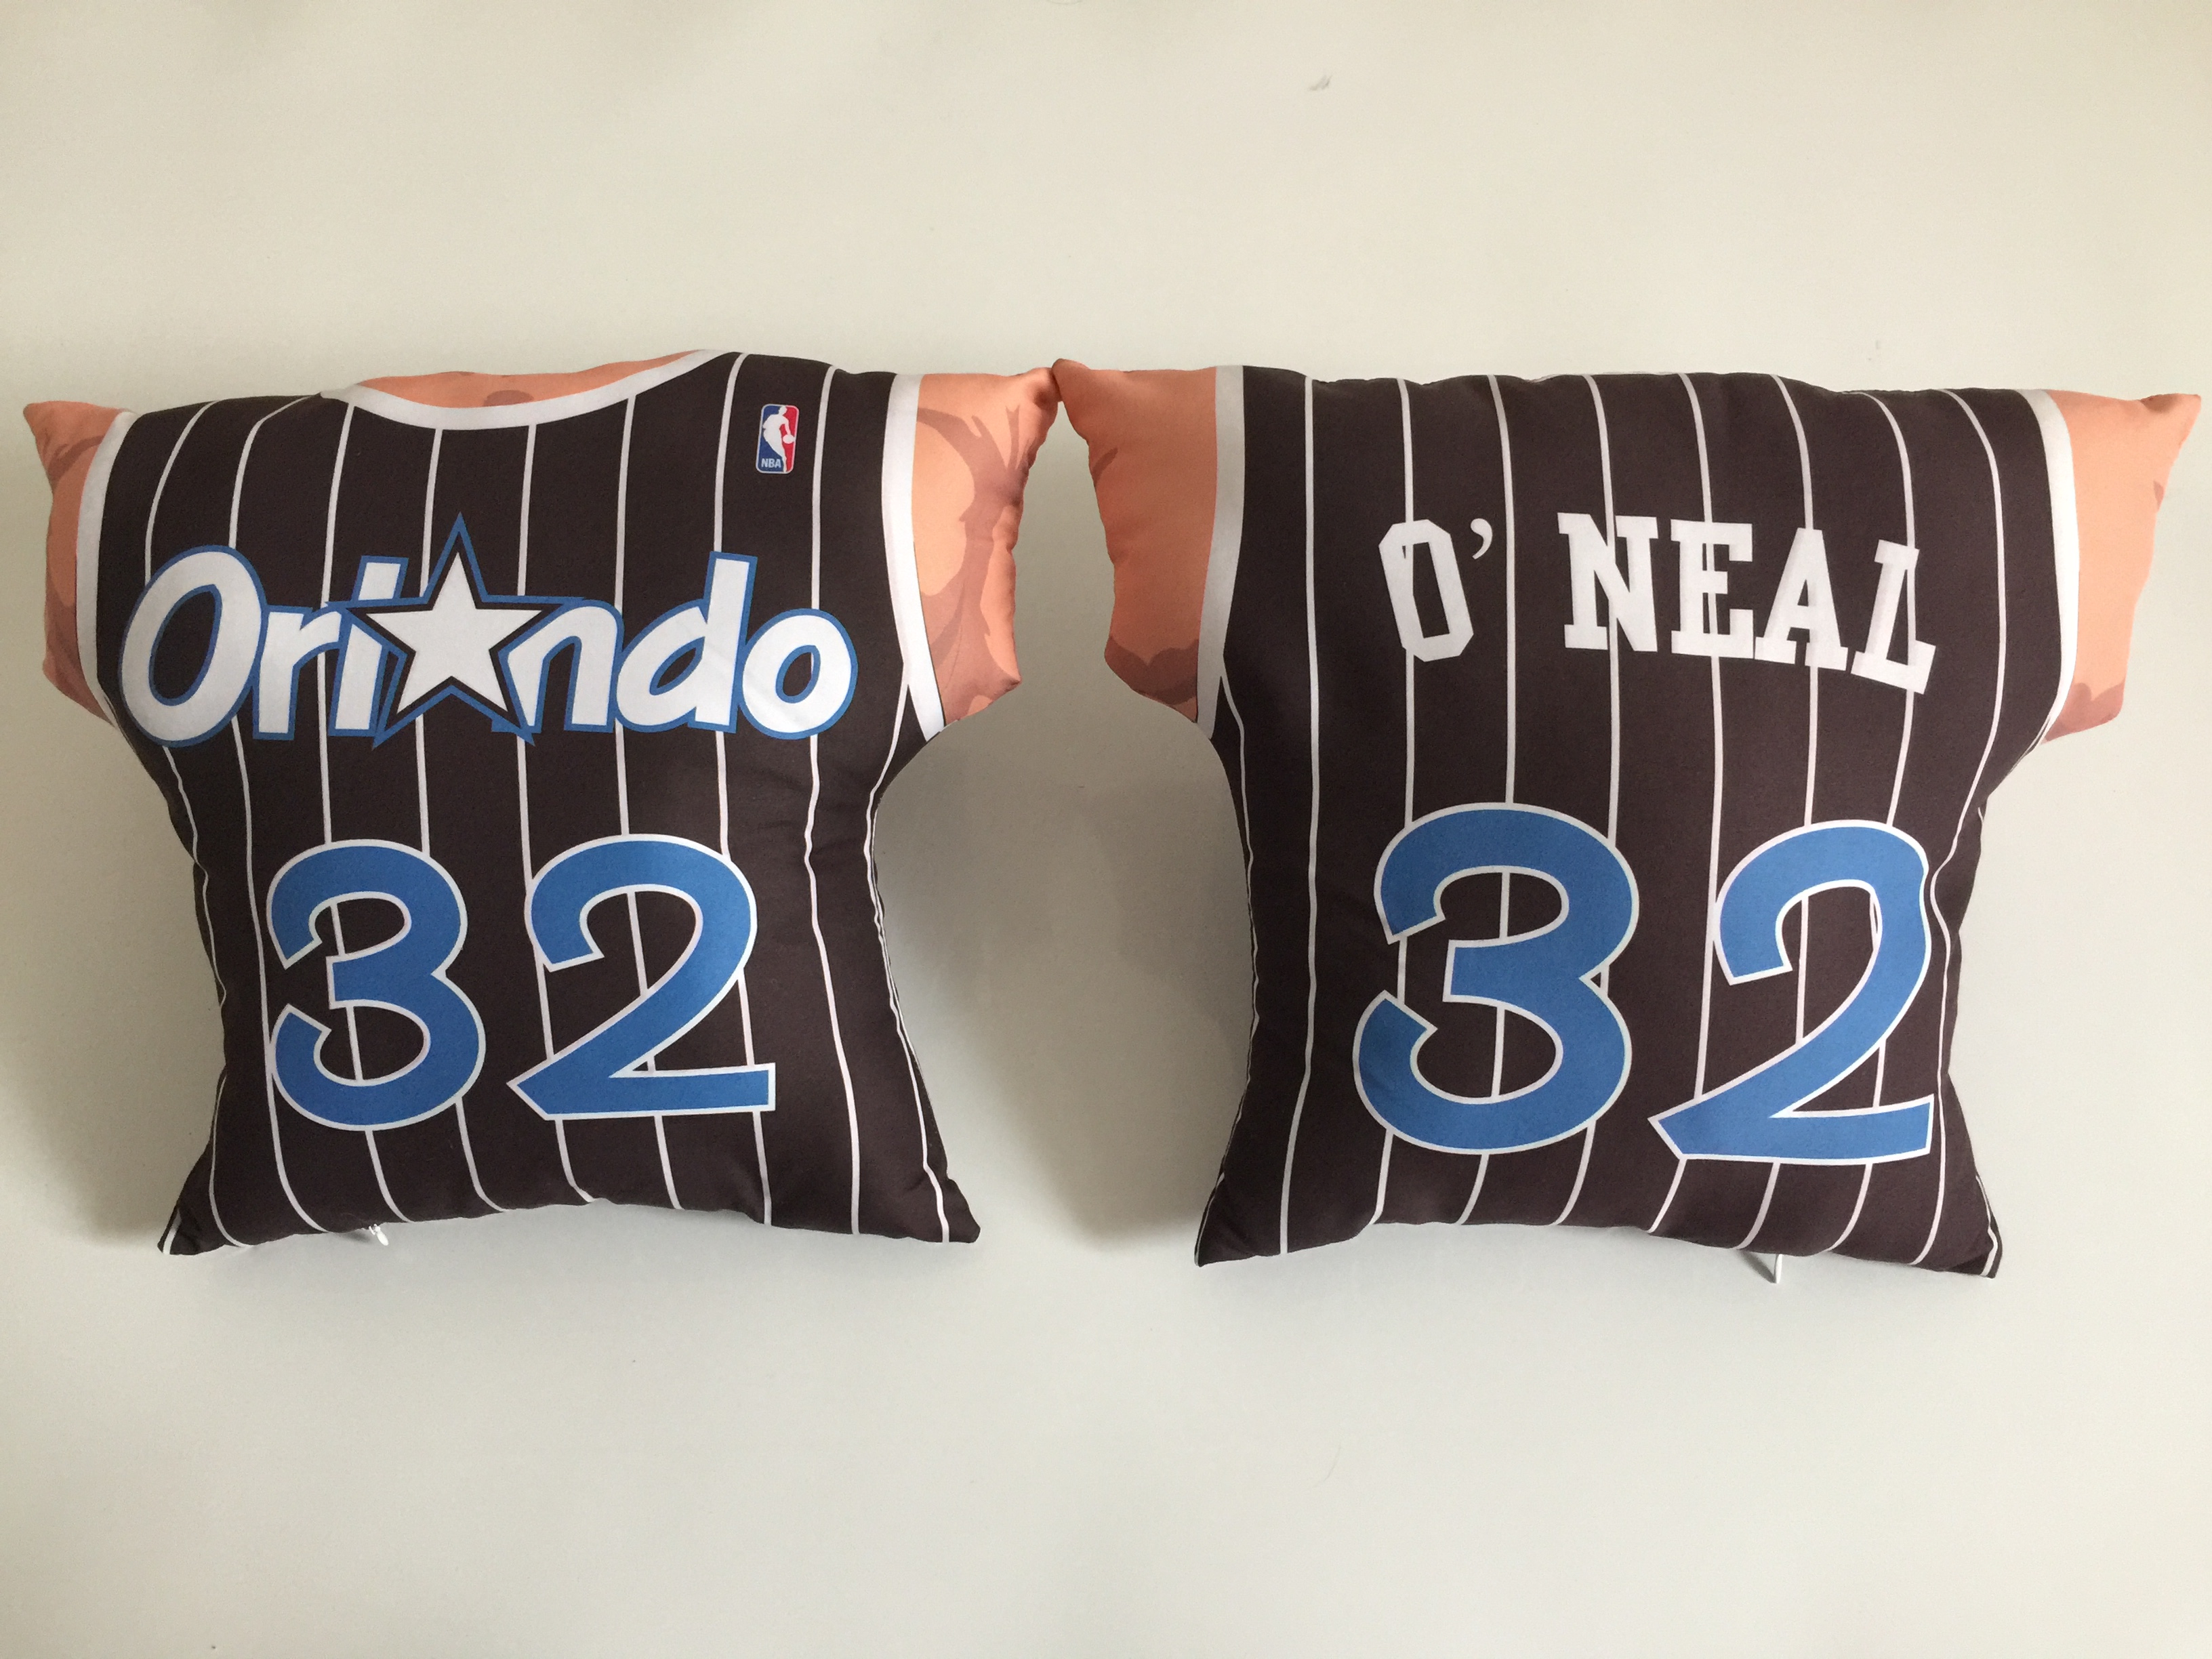 Orlando Magic 32 Shaquille O'Neal Black NBA Pillow